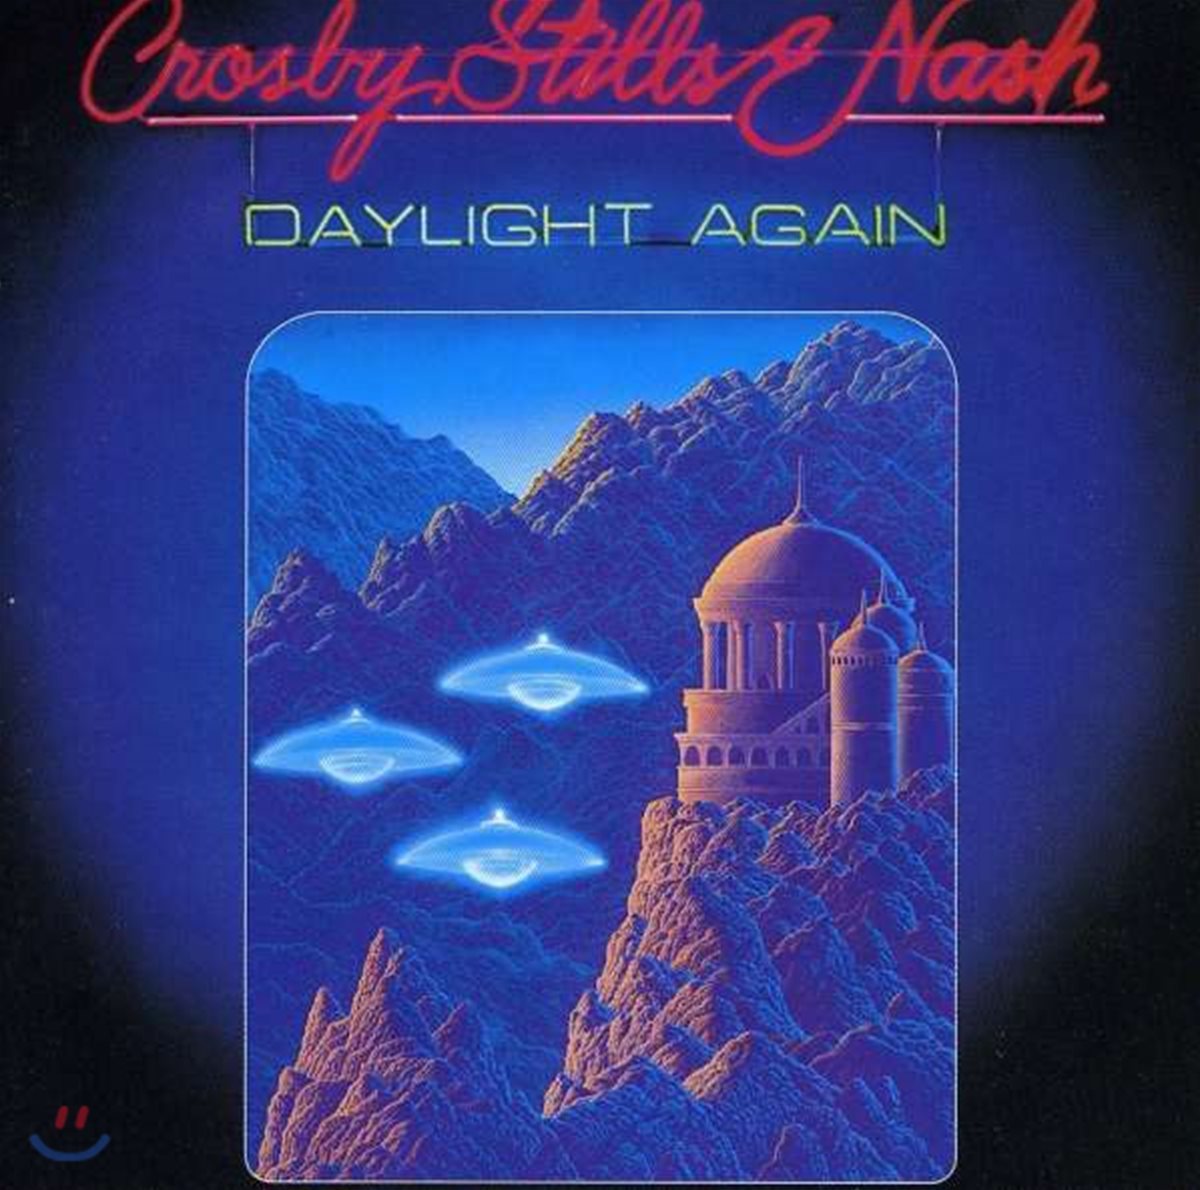 Crosby, Stills & Nash - Daylight Again [Remastered]